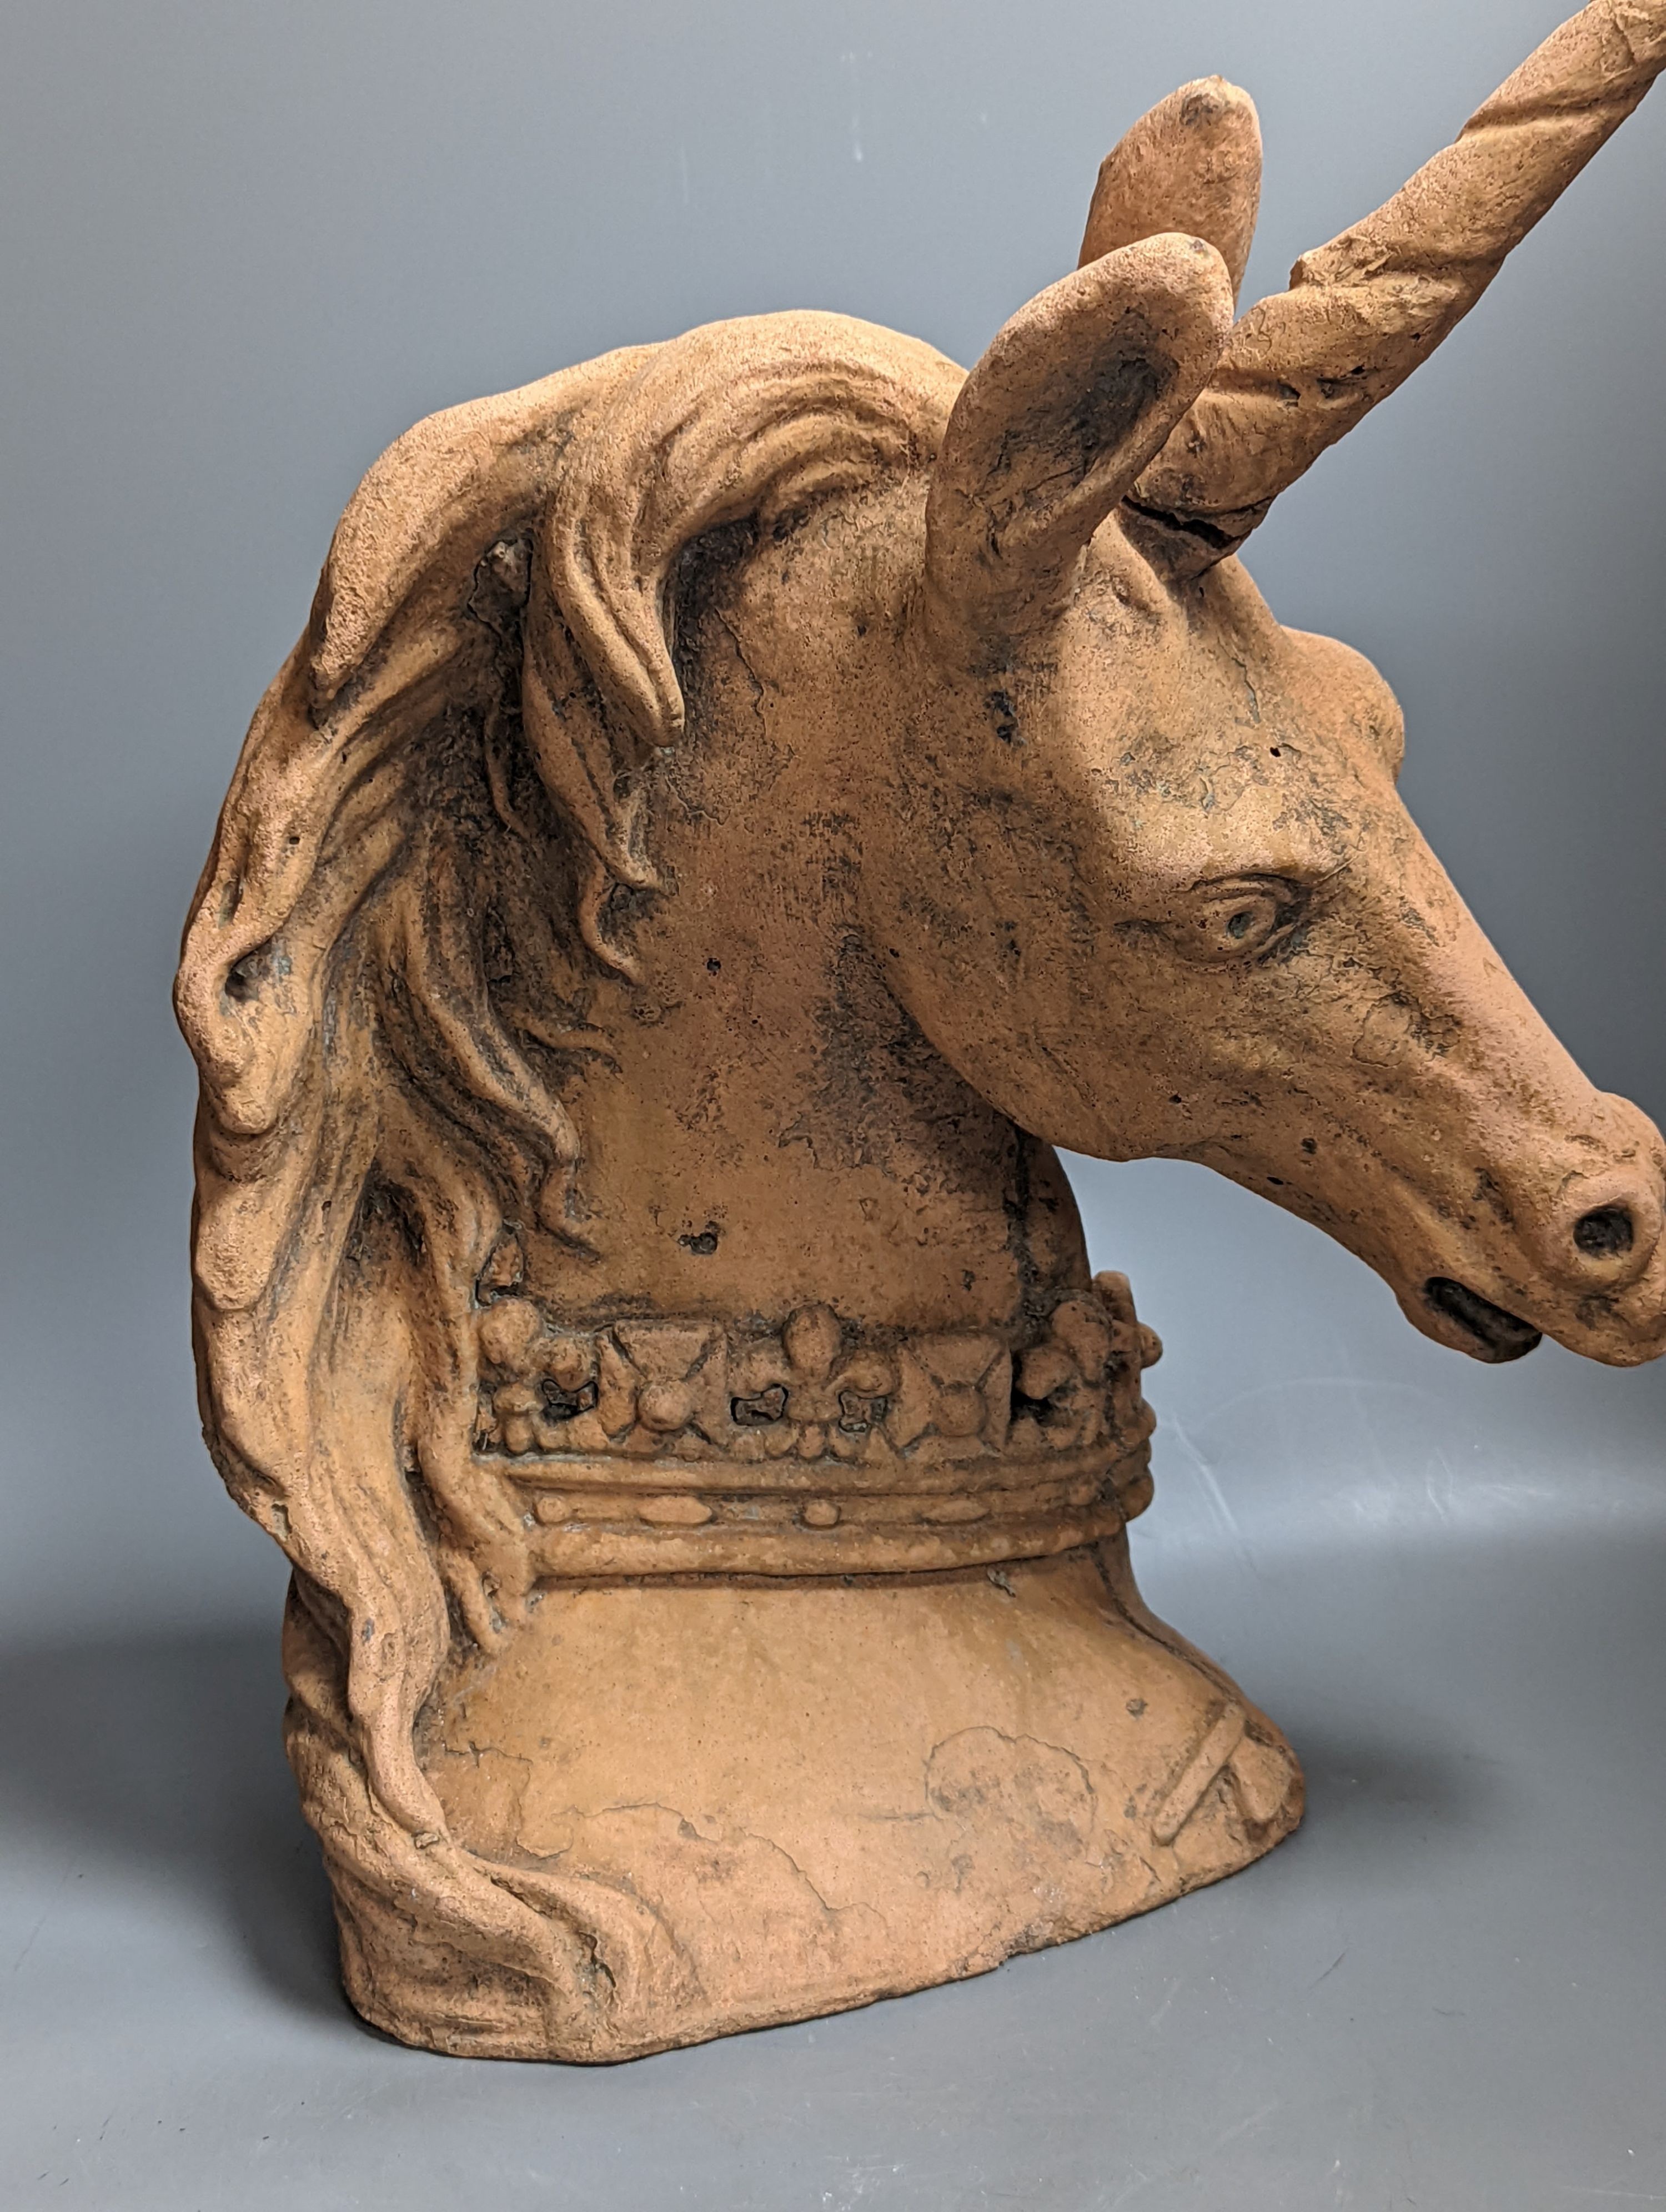 A Terracotta model of a unicorn head 45cm